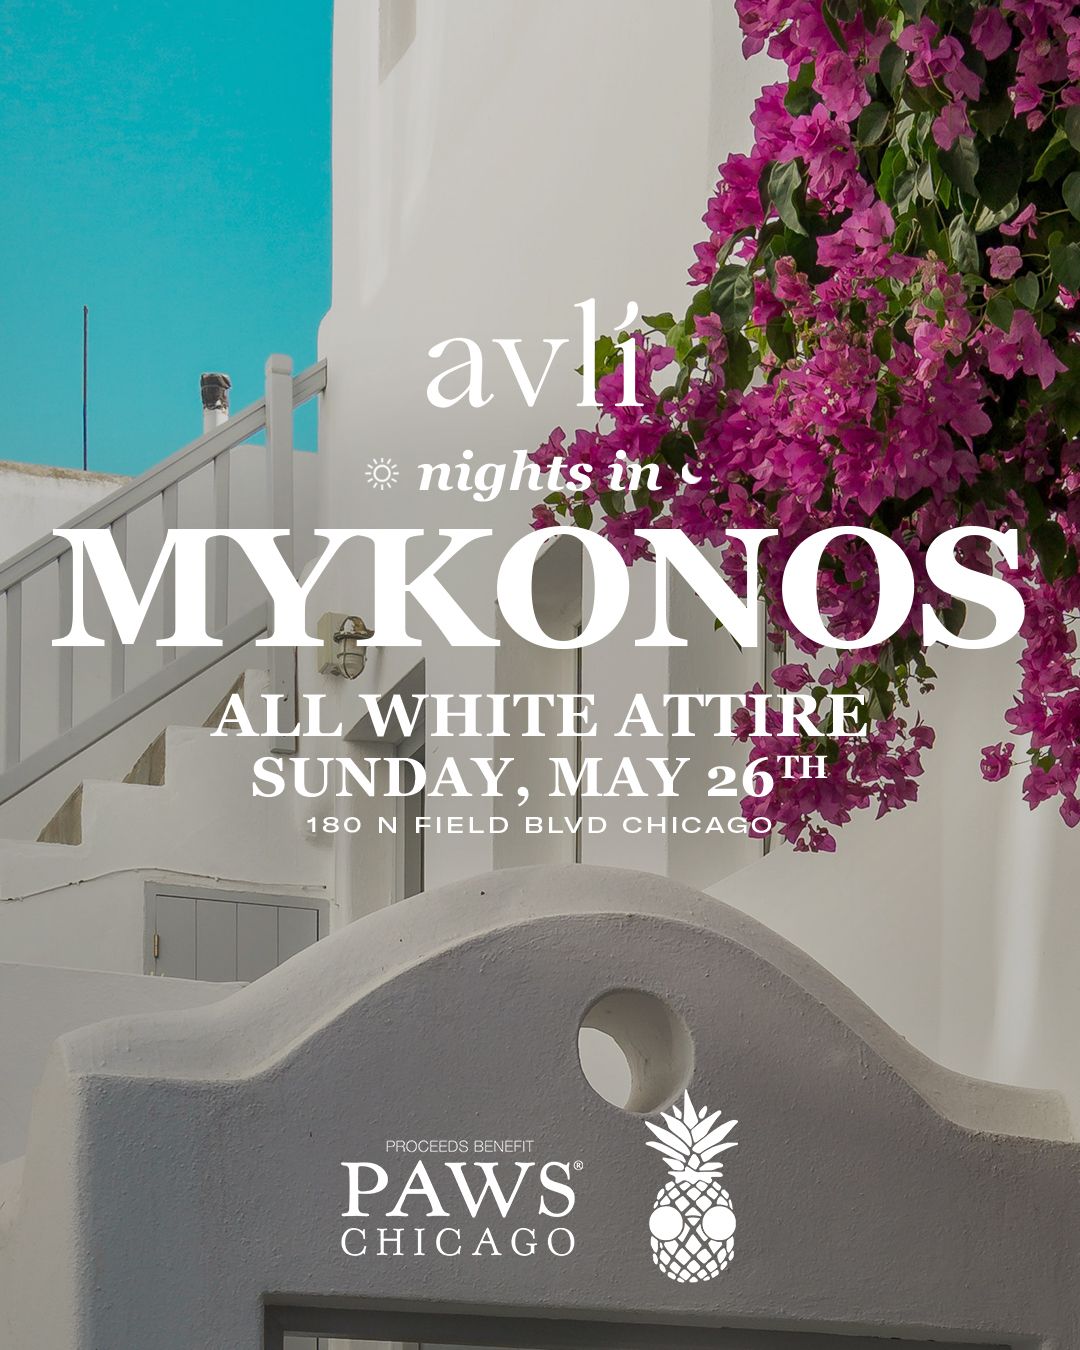 AVLI NIGHTS IN MYKONOS - WHITE ATTIRE PARTY